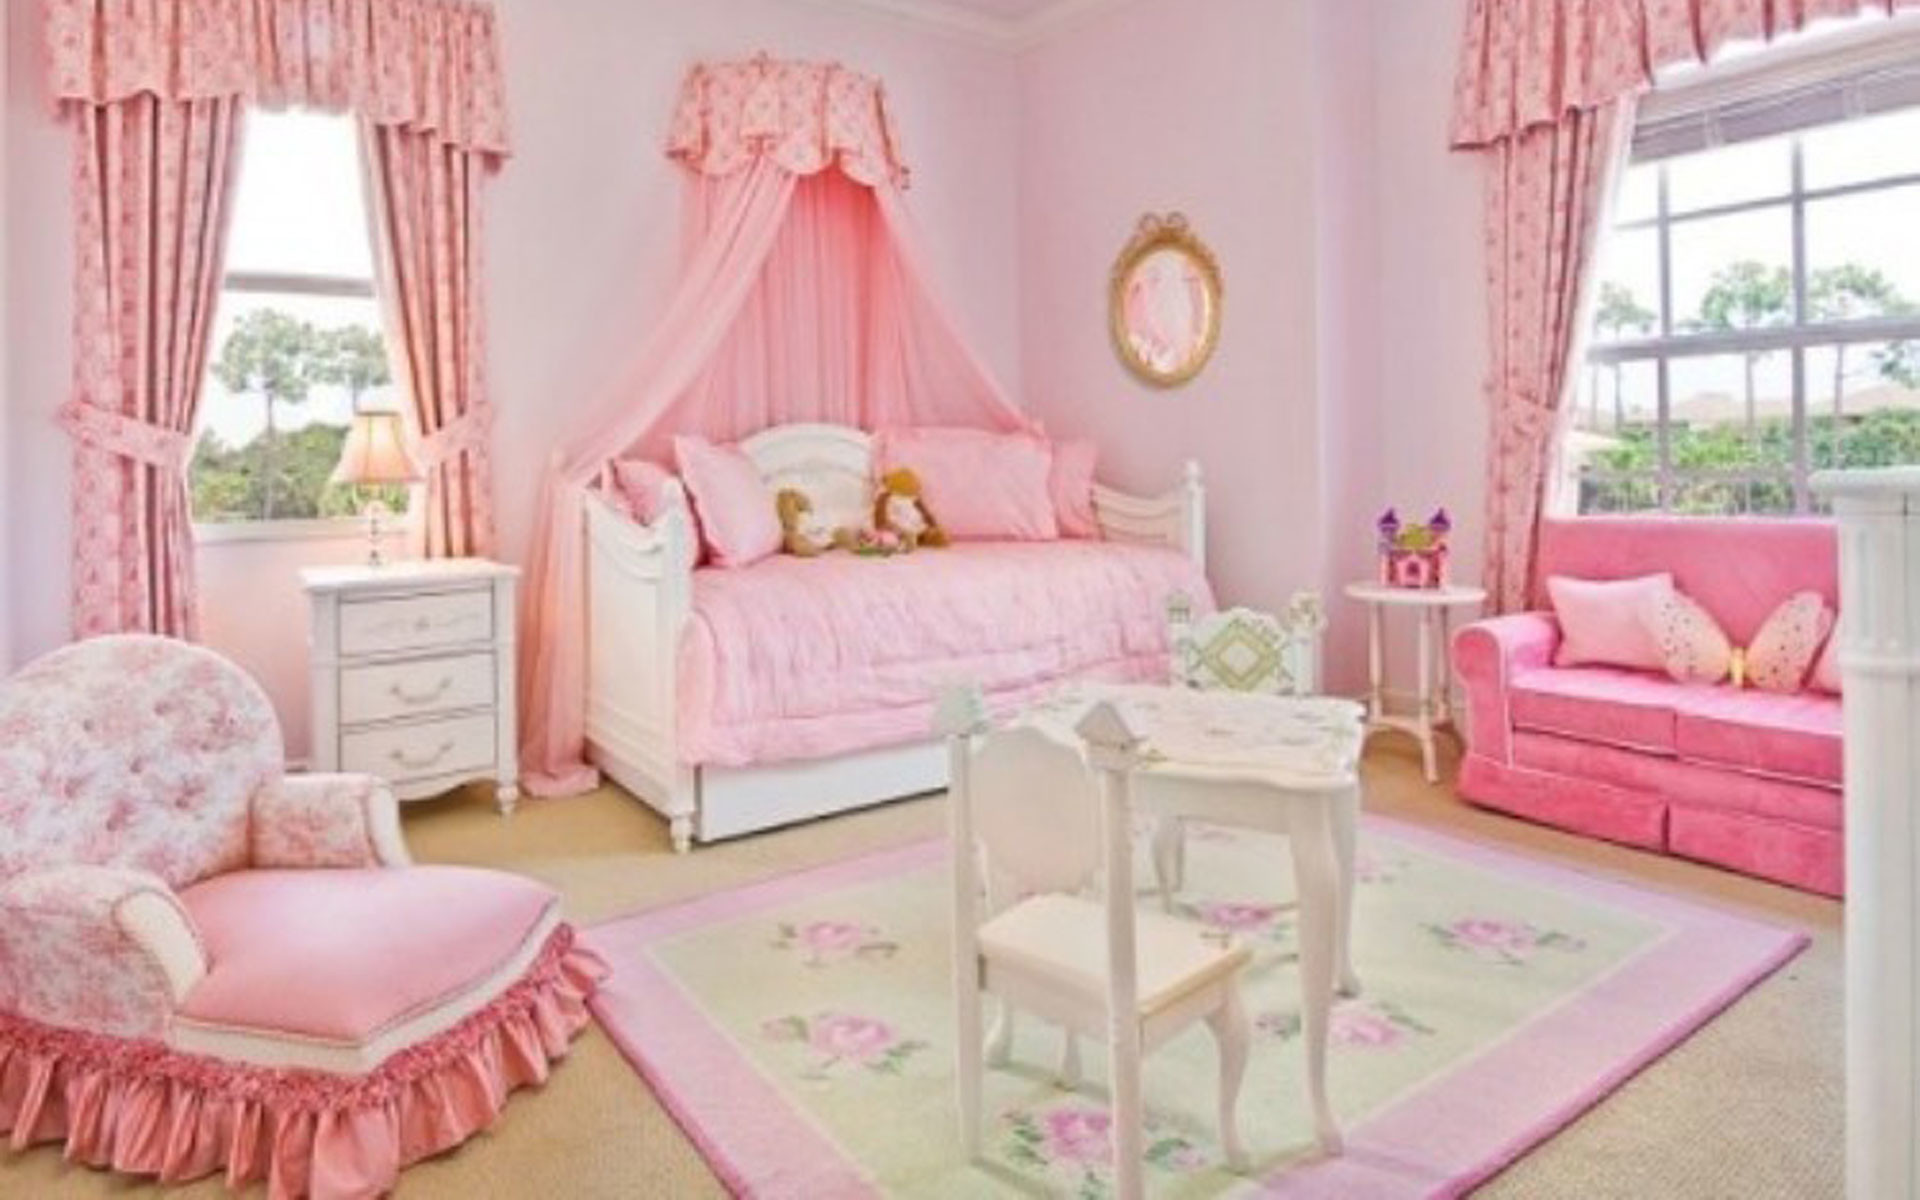 1920x1200 Princess bedroom idea for teenagers